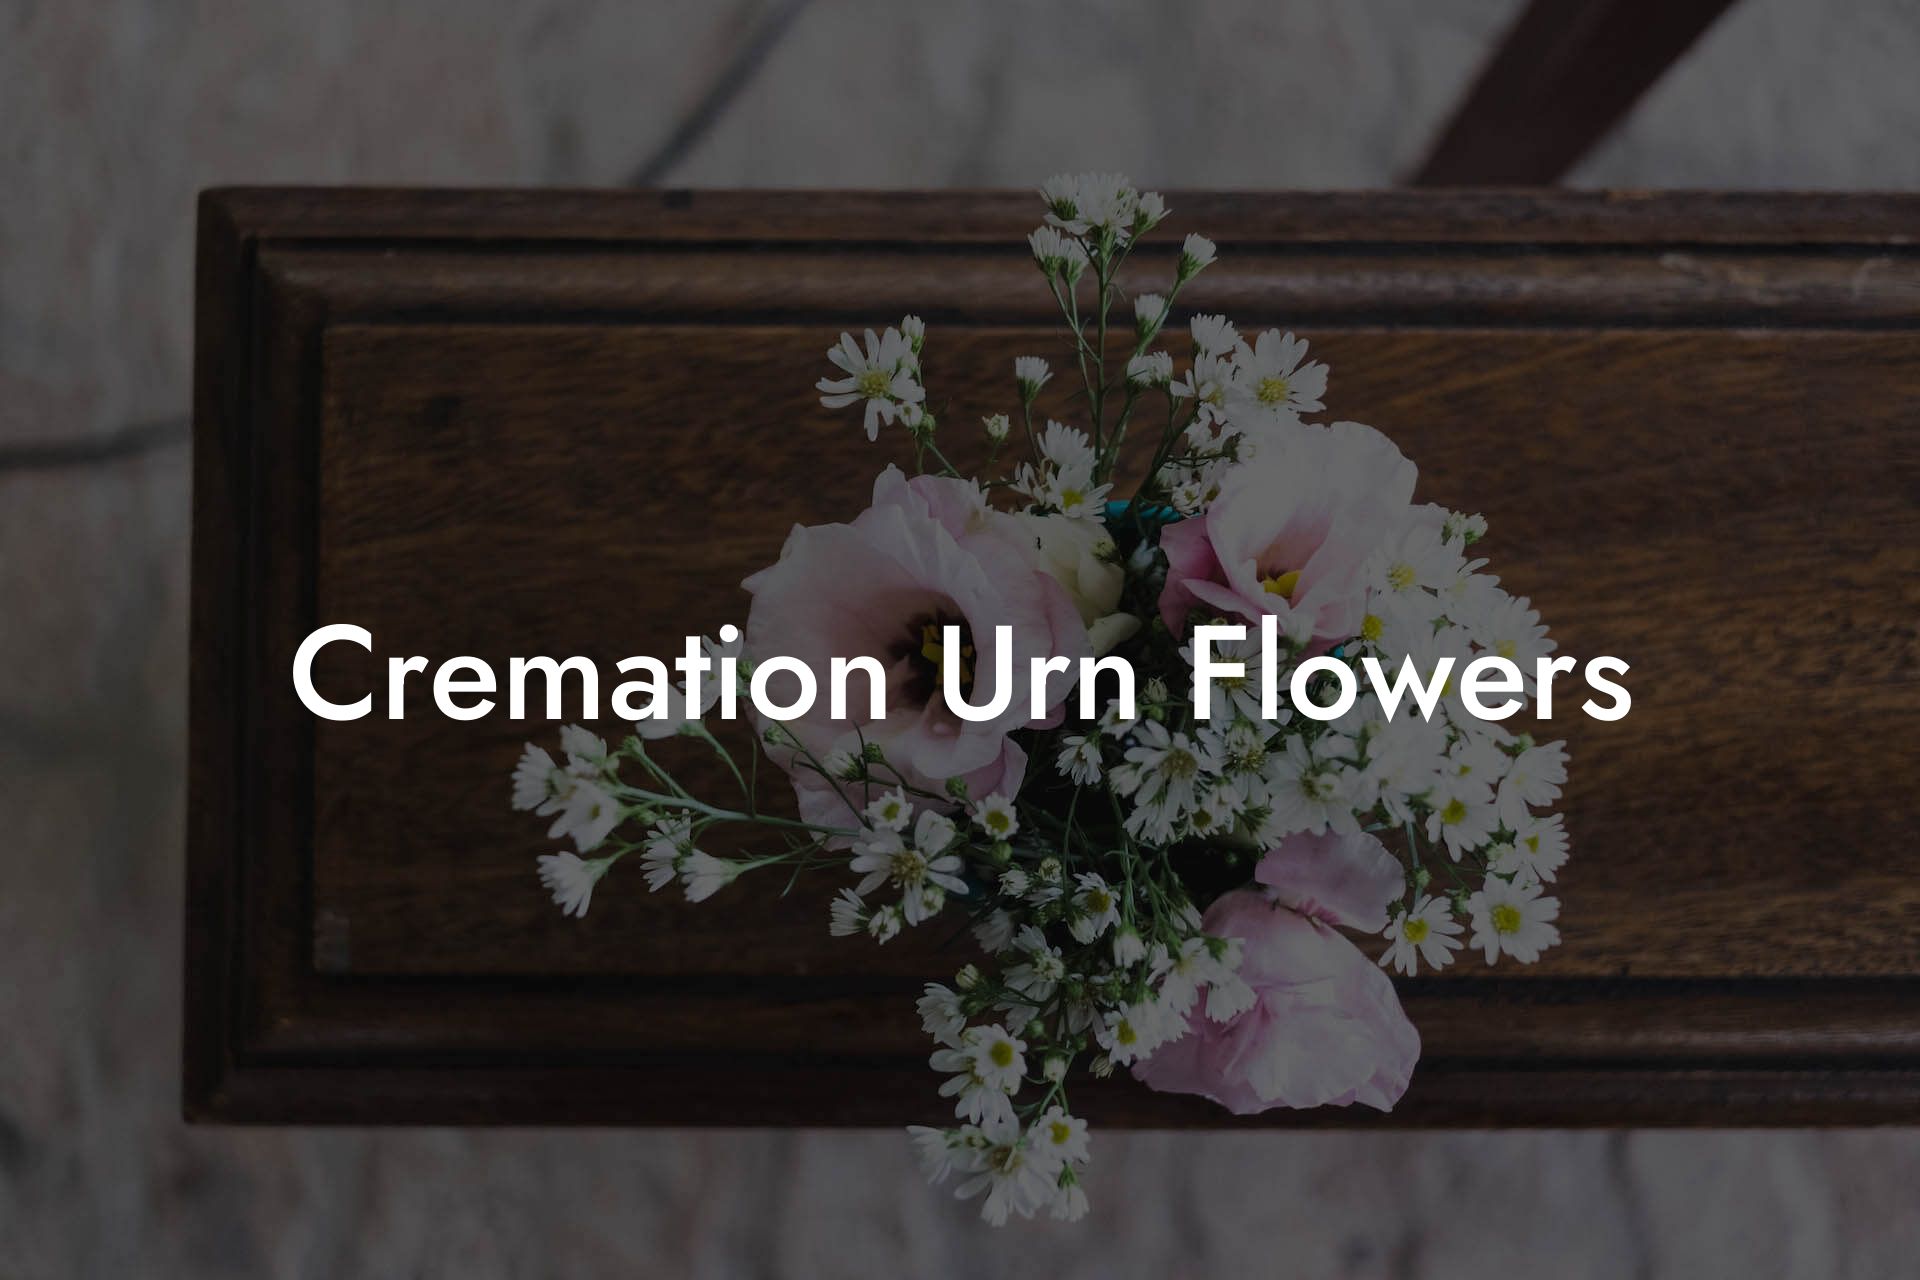 Cremation Urn Flowers